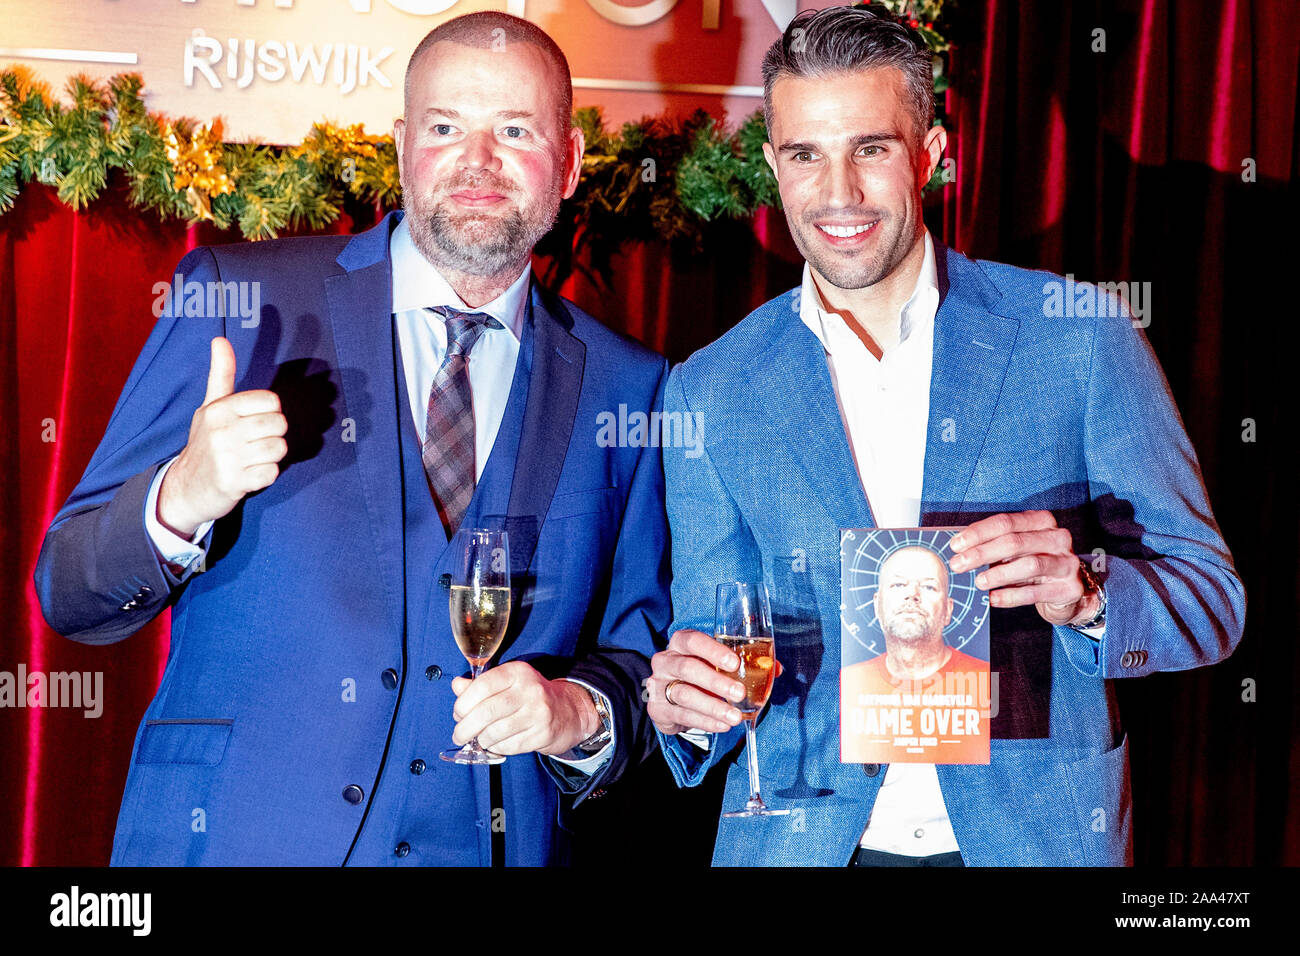 Rijswijk, Netherlands. 19th Nov, 2019. RIJSWIJK, Centre, 19-11-2019, Raymond van Barneveld at the launch party of his new book ‘Game Over'. Credit: Pro Shots/Alamy Live News Stock Photo